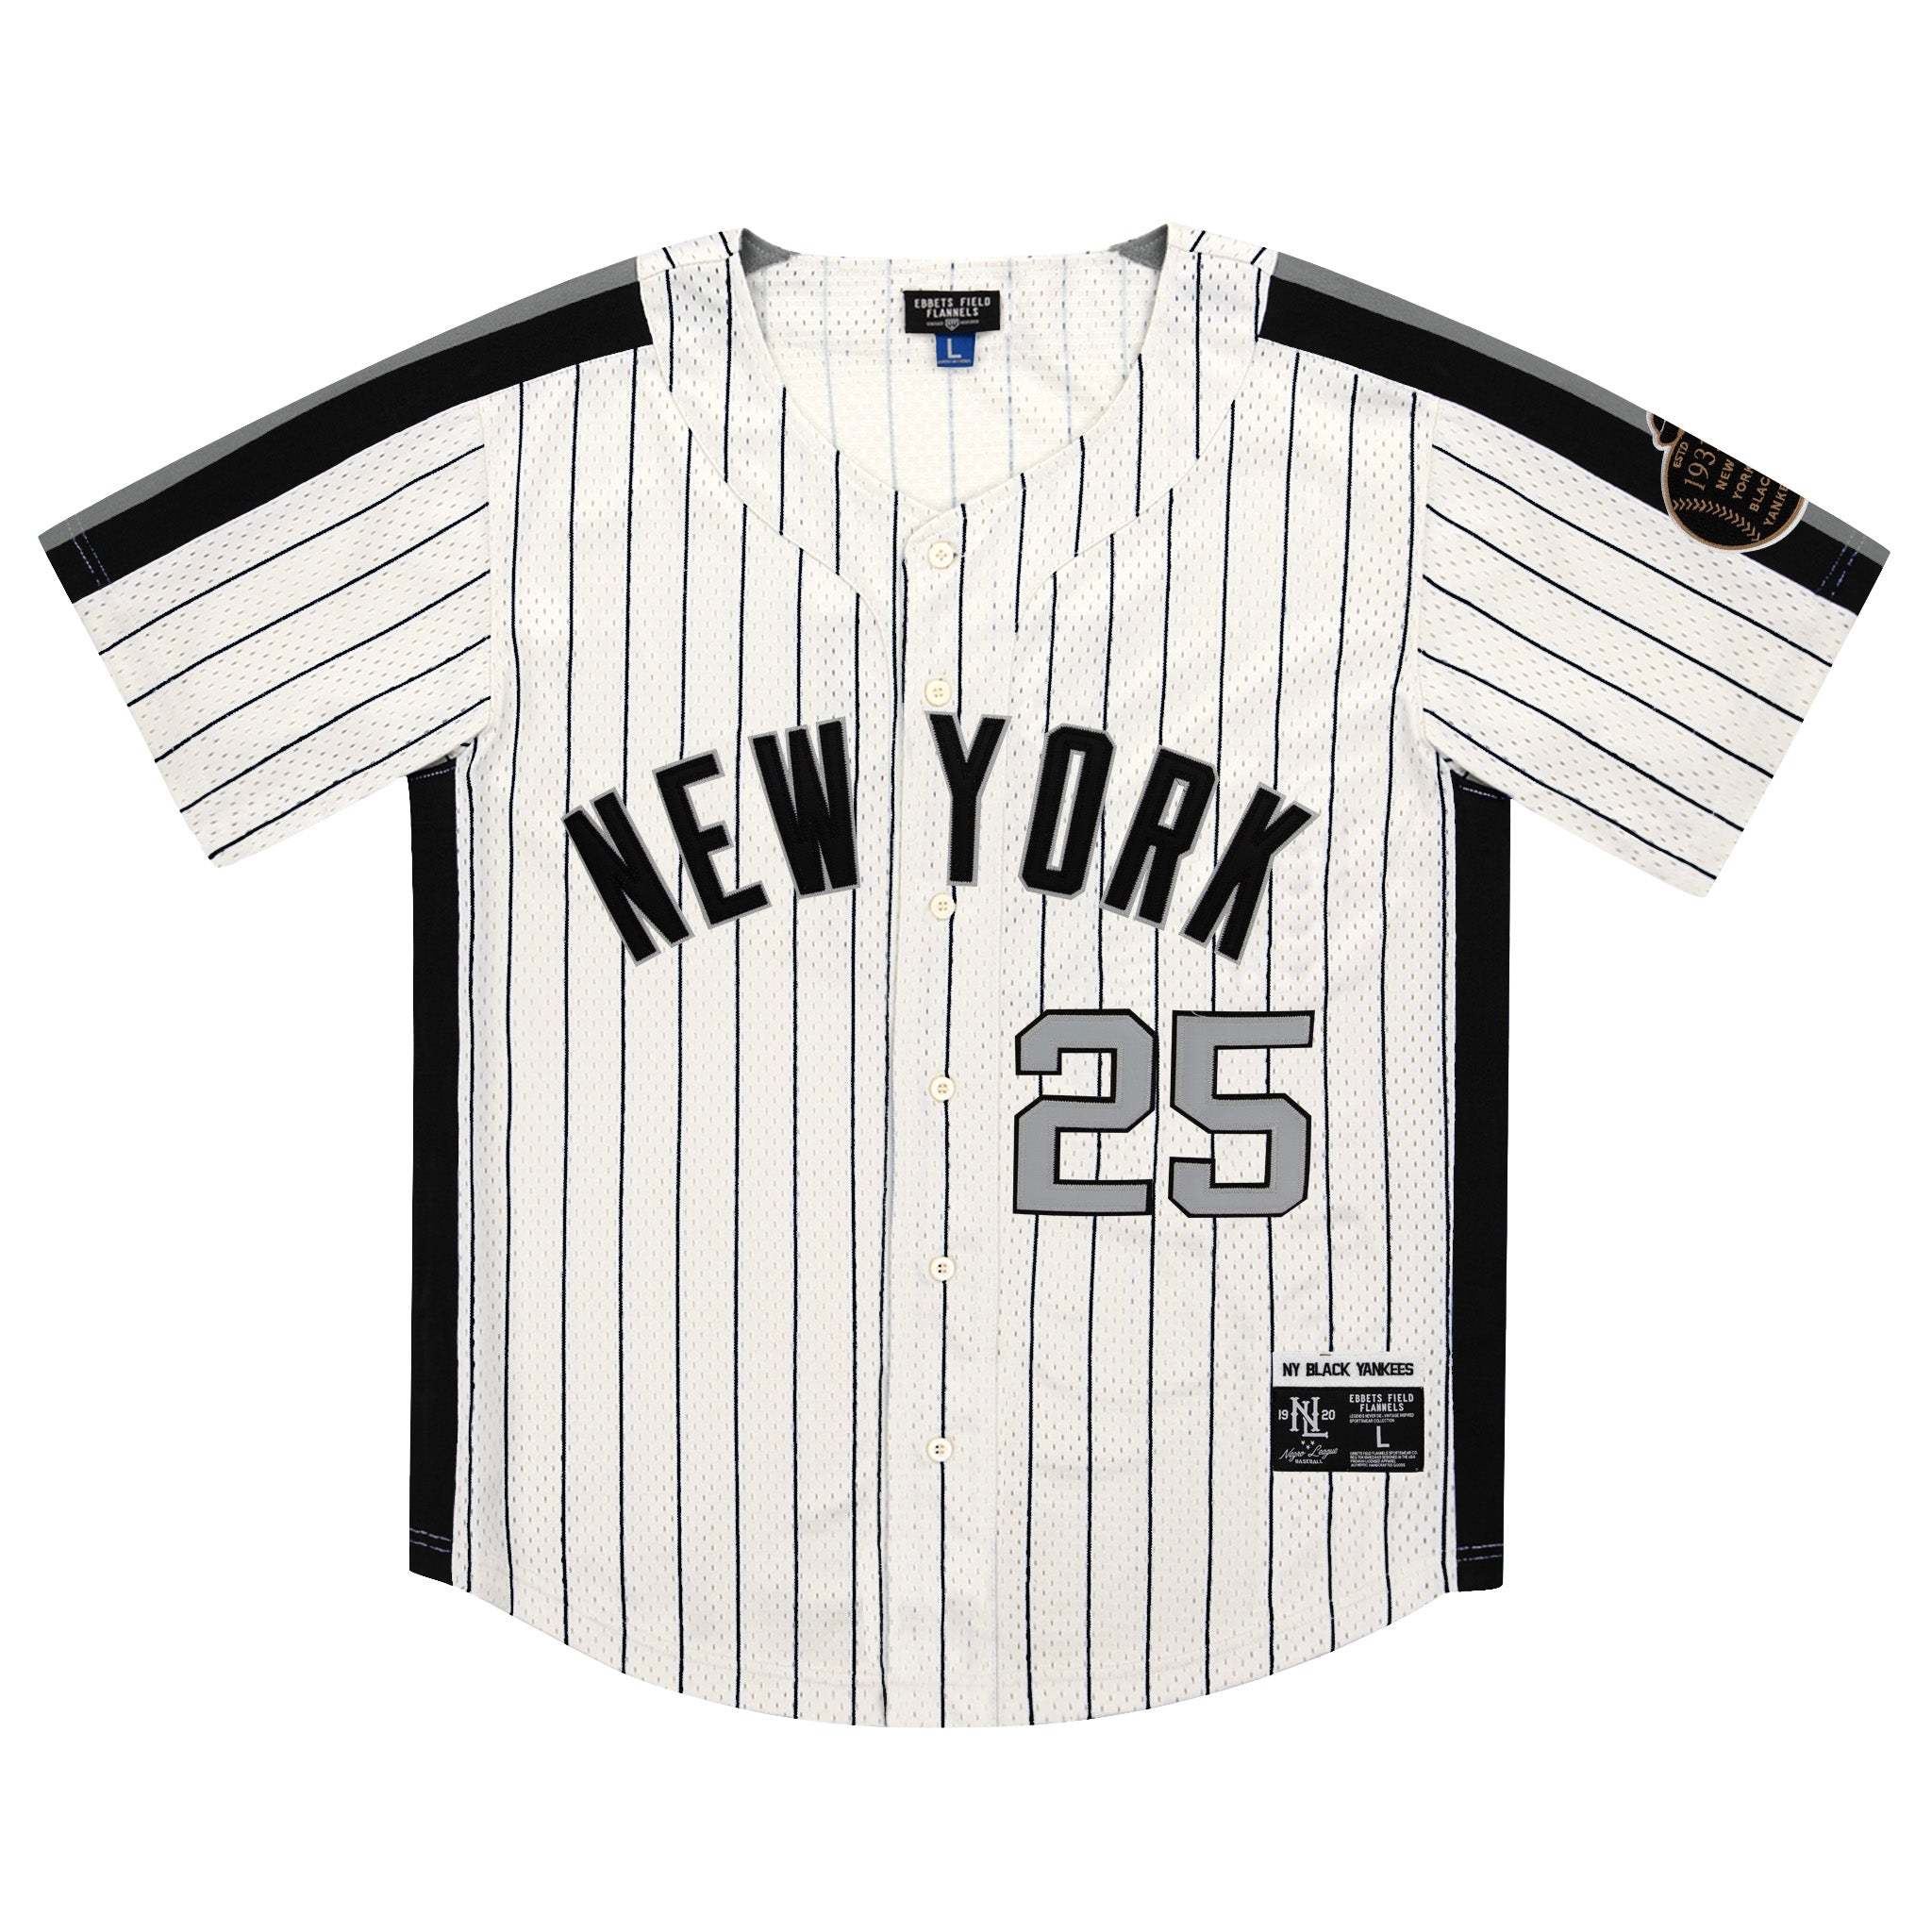 New York Black Yankees EFF NLB Pinstripe Button Down Jersey